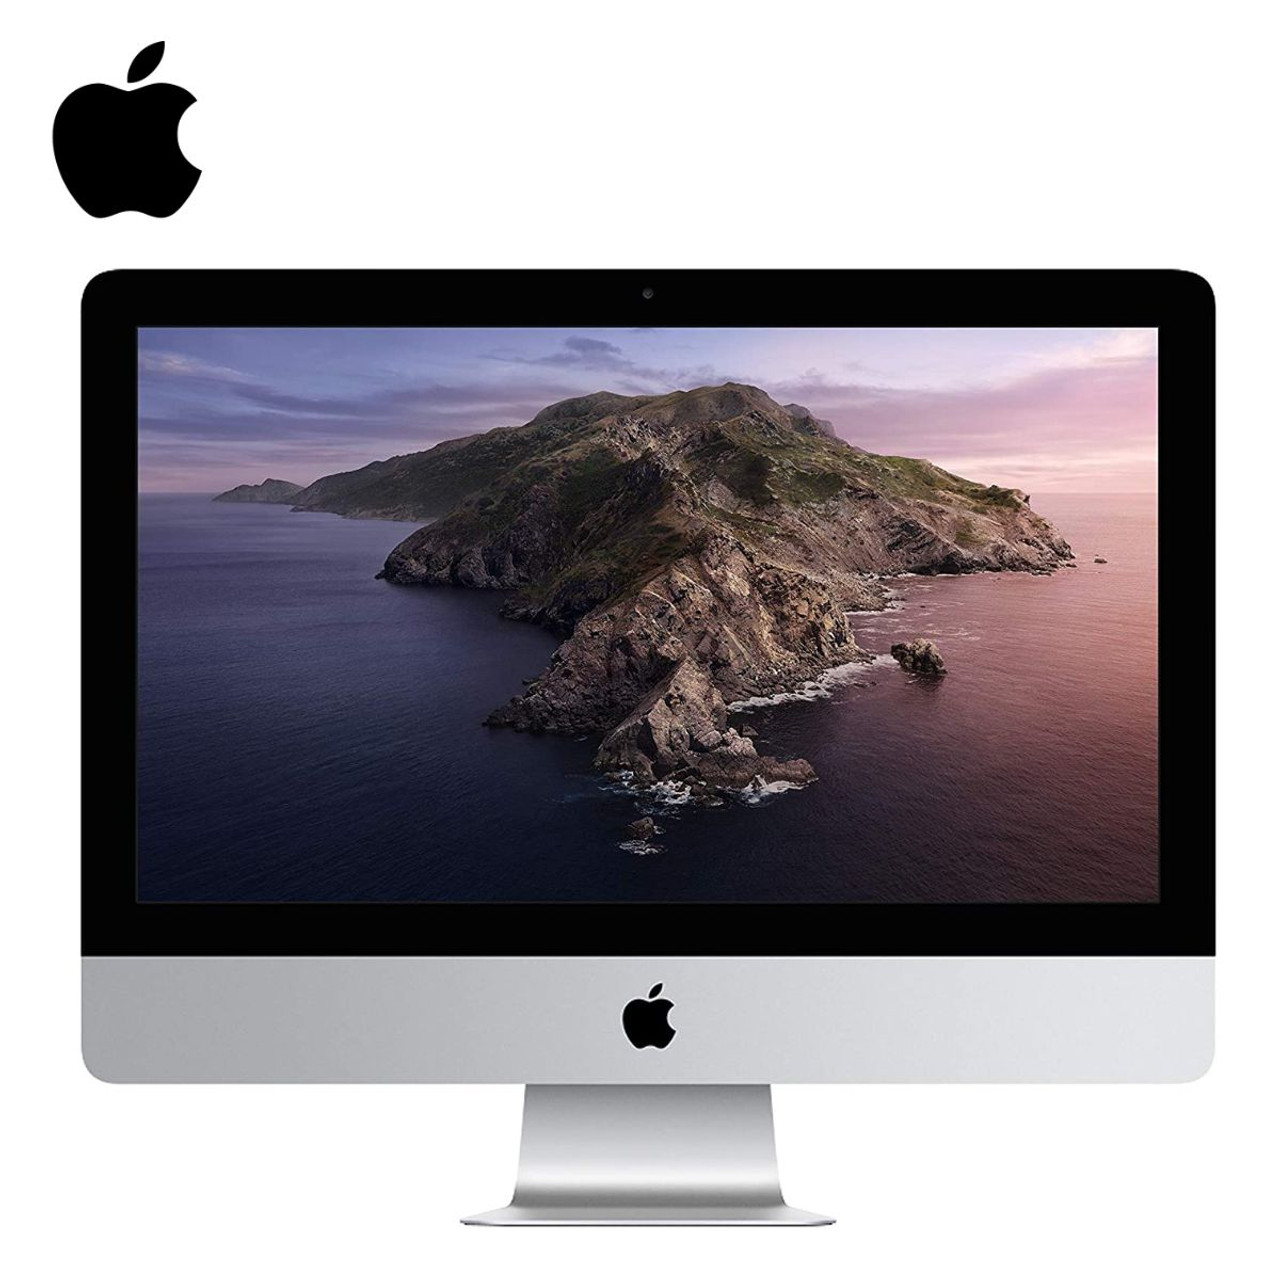 Apple iMac 21.5-inch (Broken/Defective) product image